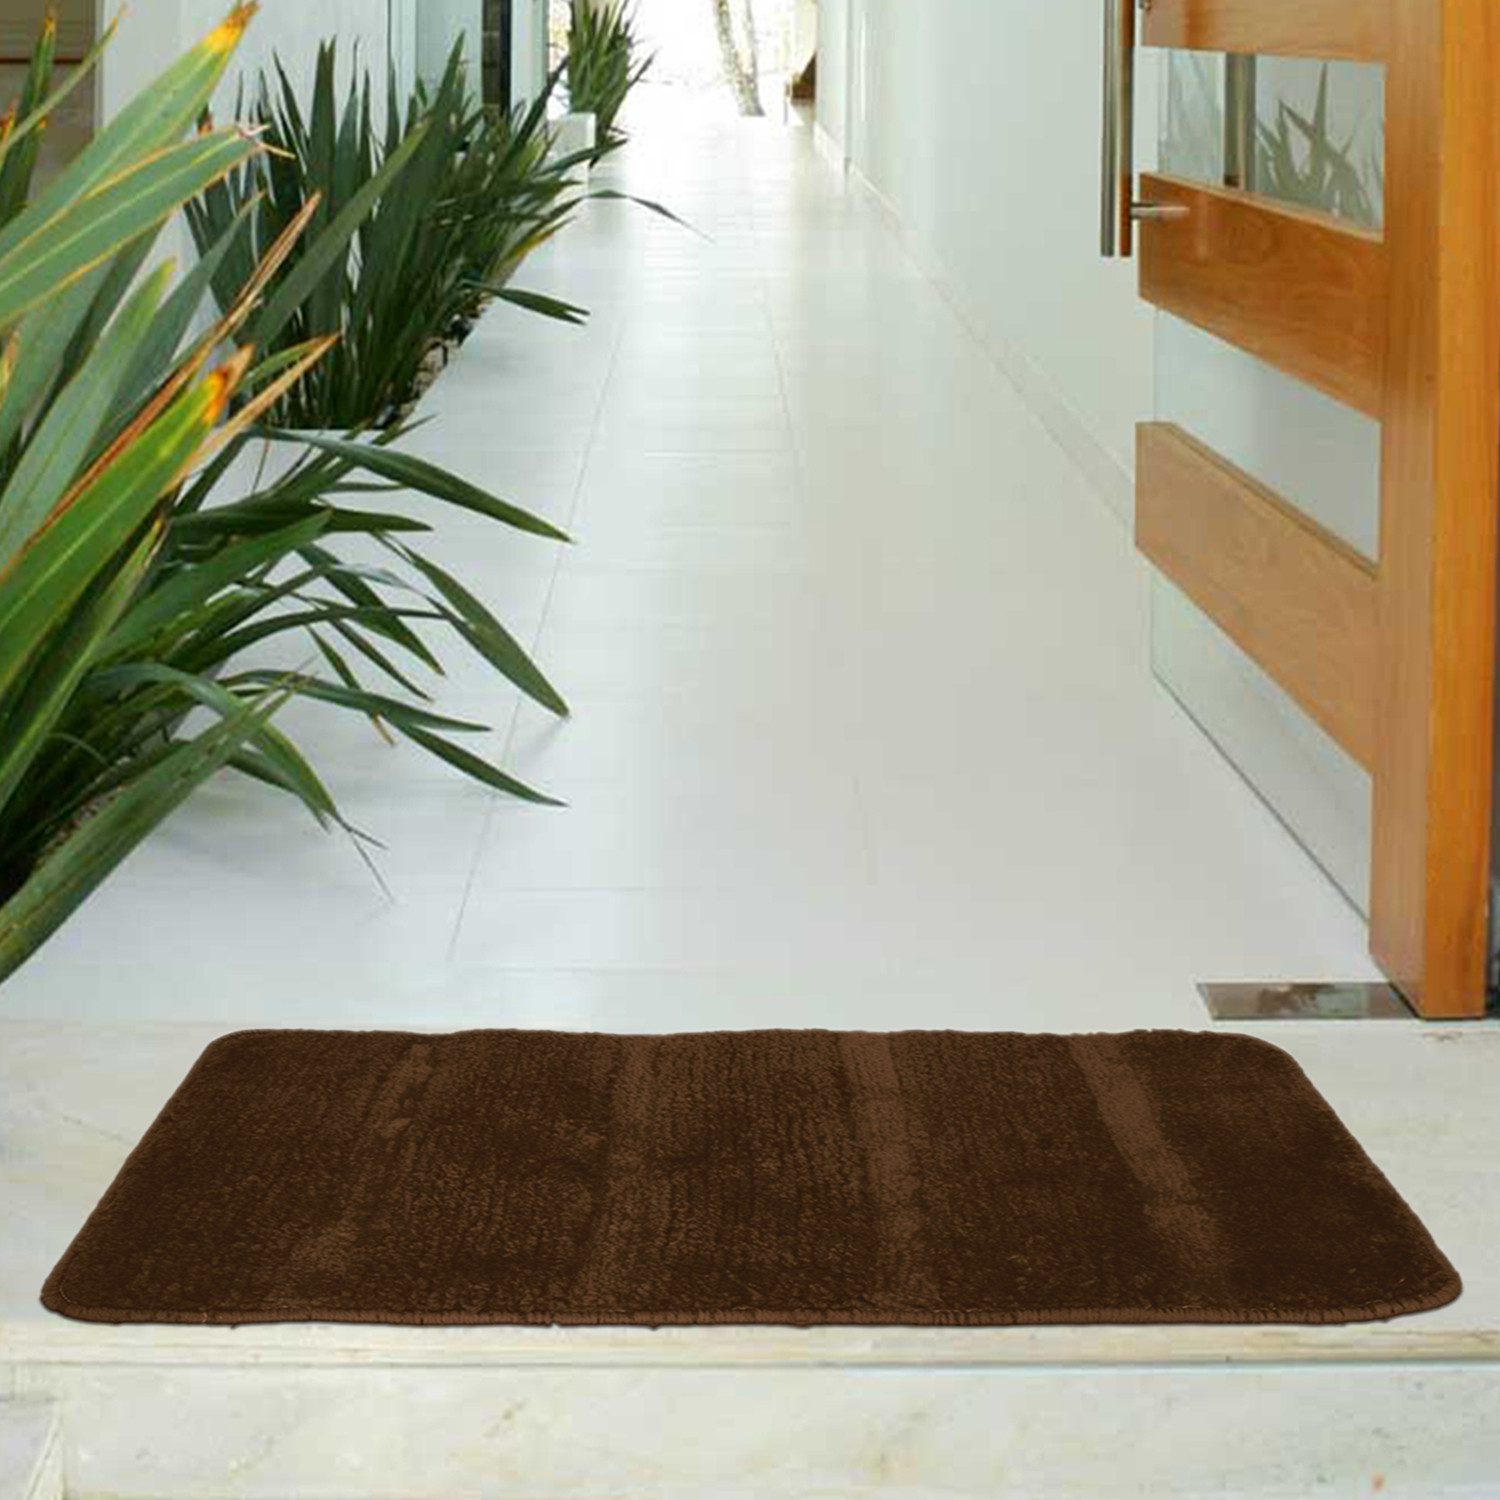 Kuber Industries Strips Design Cotton Door Mat For Porch/Kitchen/Bathroom/Laundry Room, 24